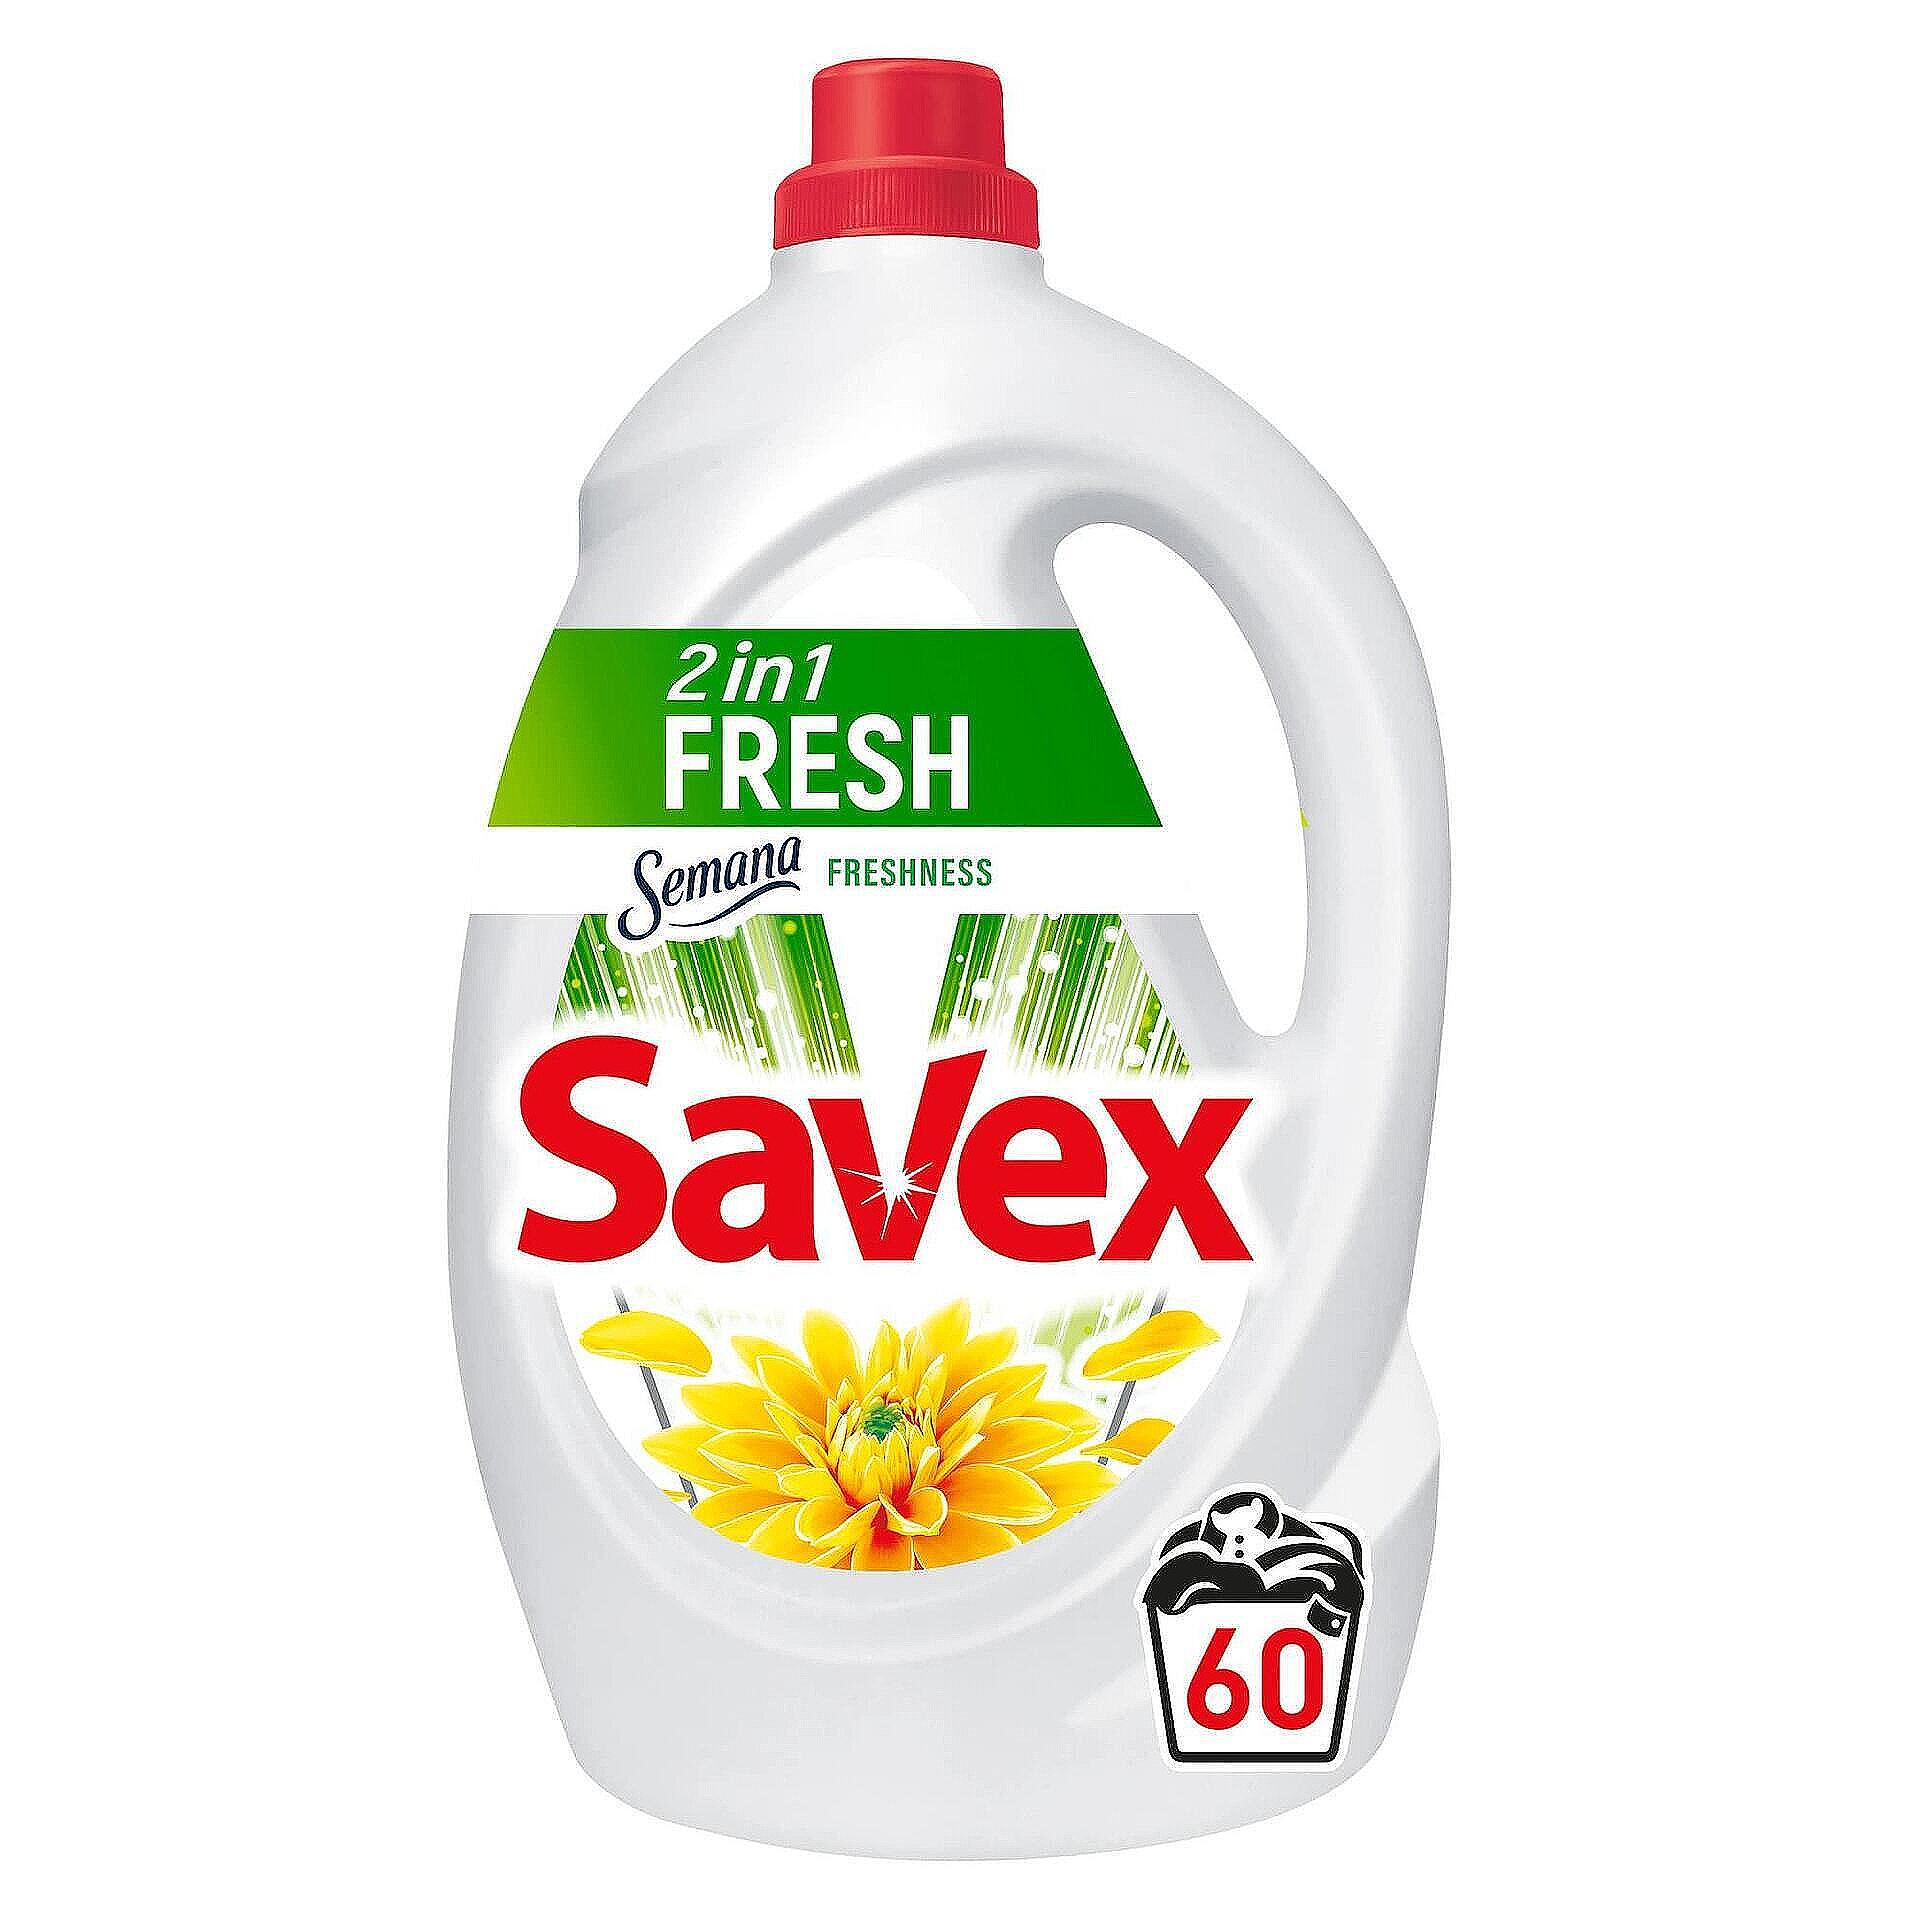 Savex 2in1 Fresh течен препарат за пране, 60 пранета | 3.3 л